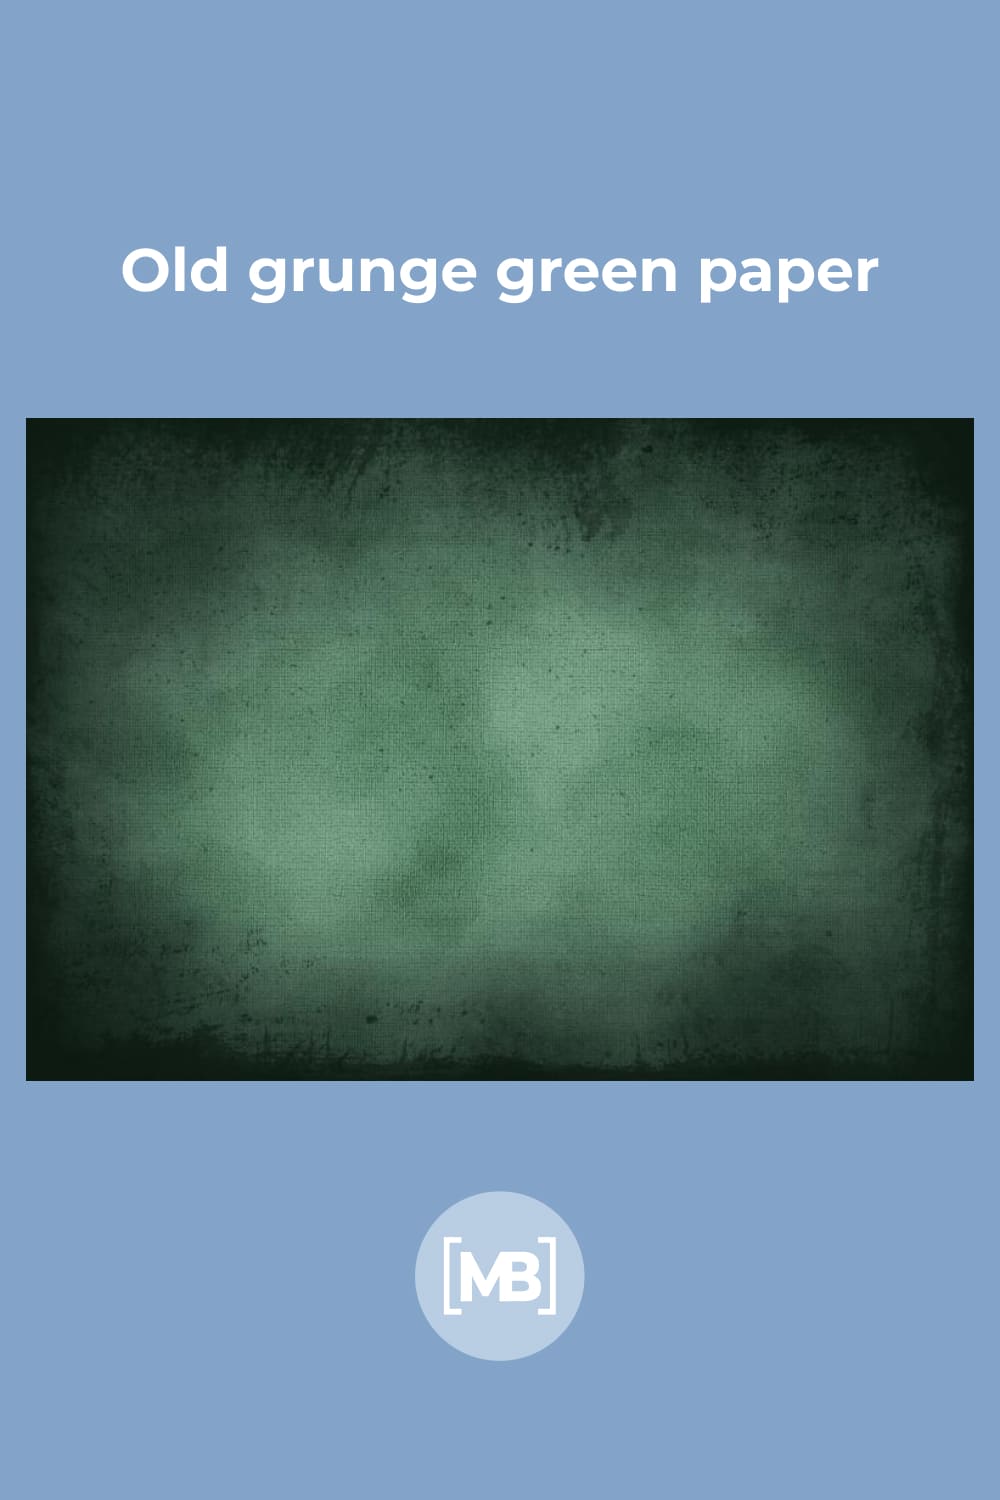 Old grunge green paper.